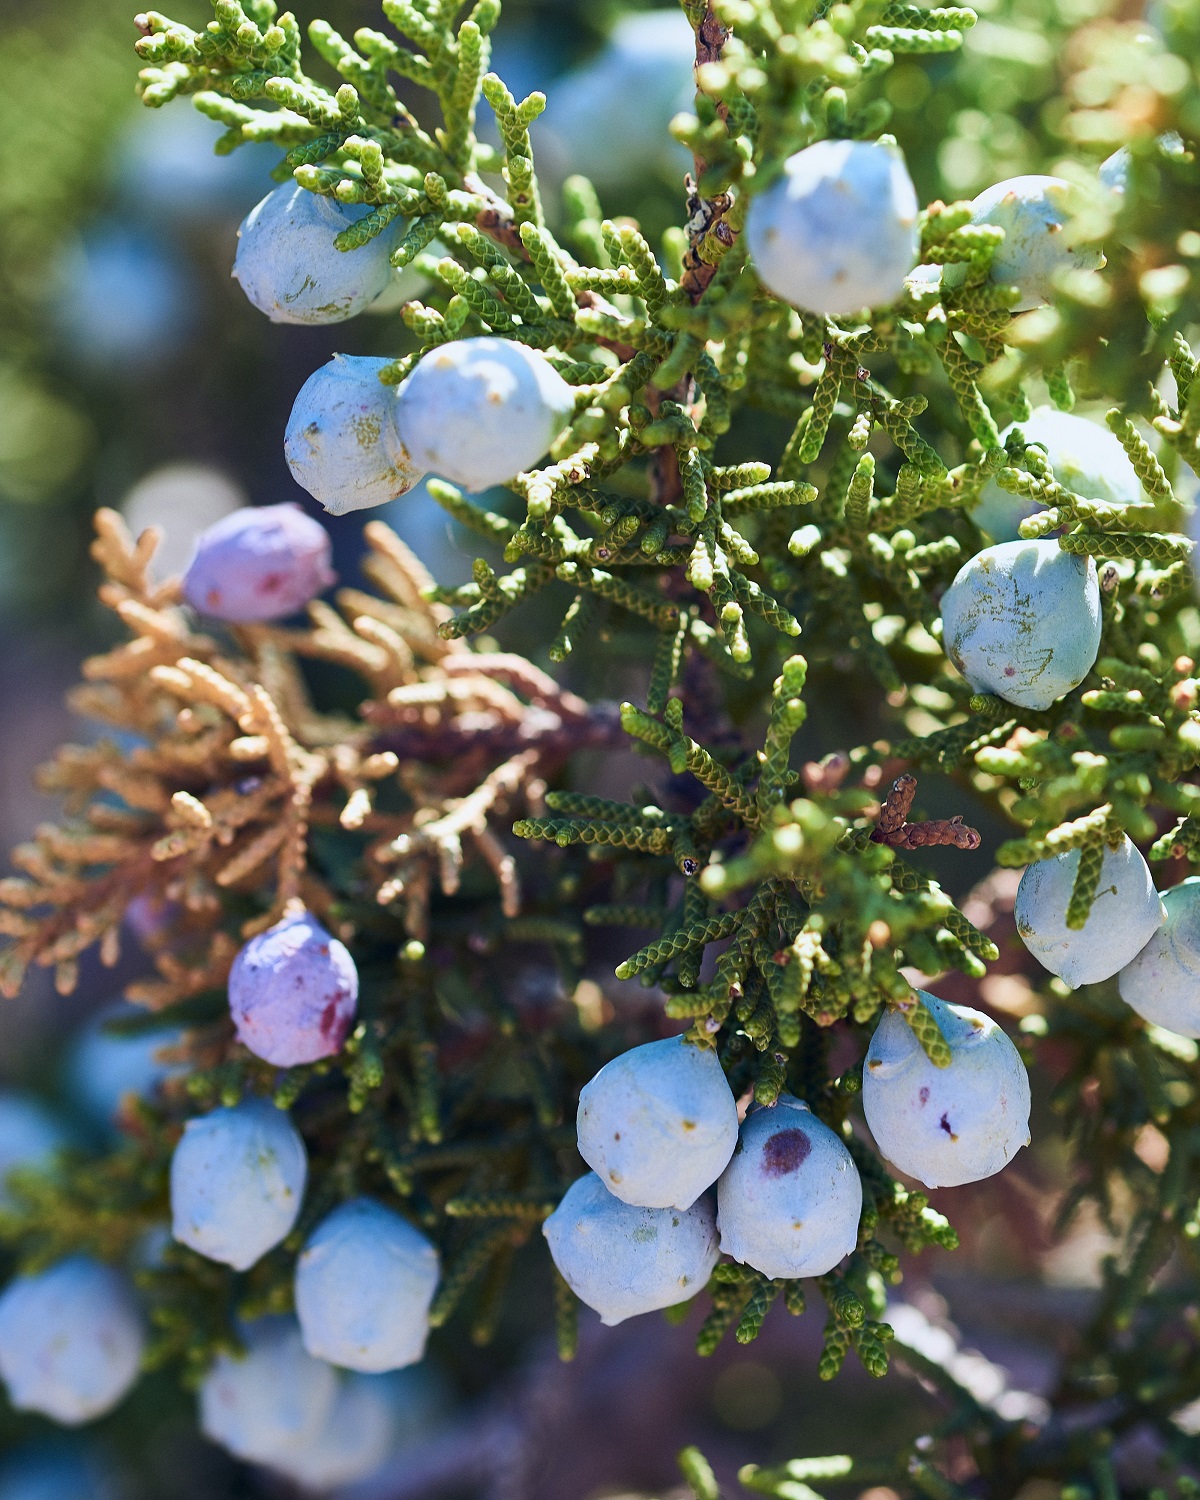 Junper berries on a tree branch growing outside in the sun